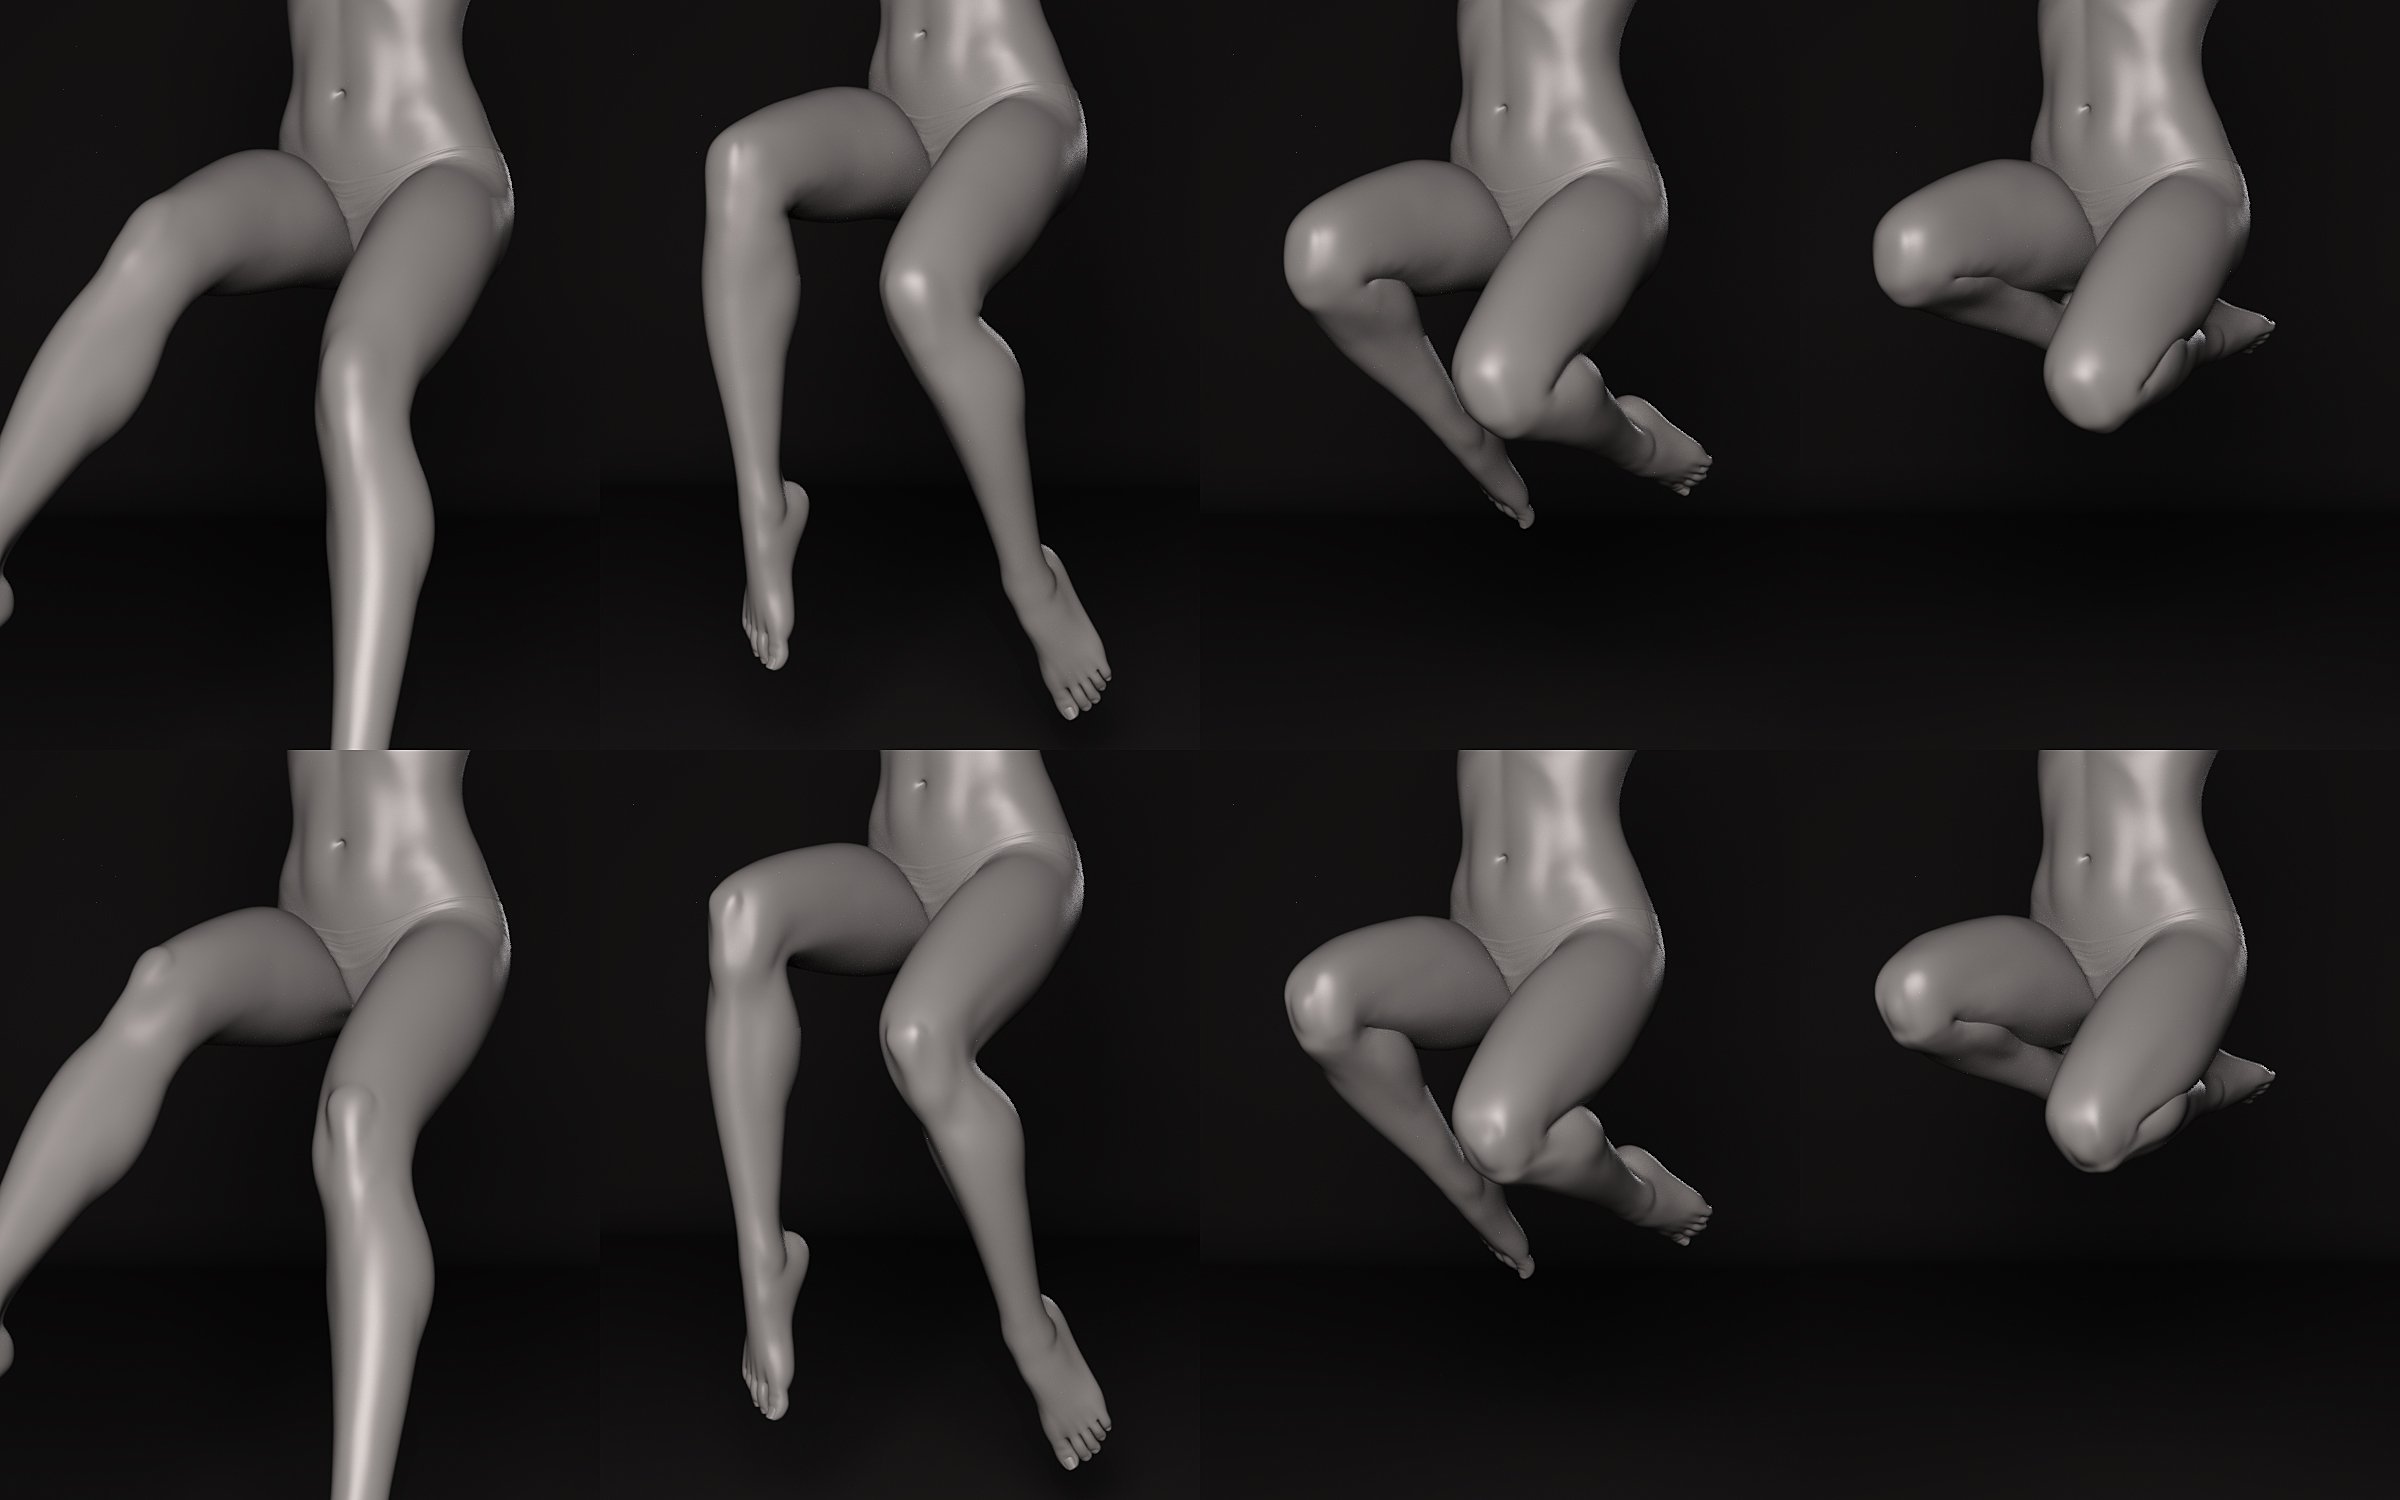 Ultimate Natural Bend Morphs for Genesis 8 Female by: K.H. Image Studio, 3D Models by Daz 3D